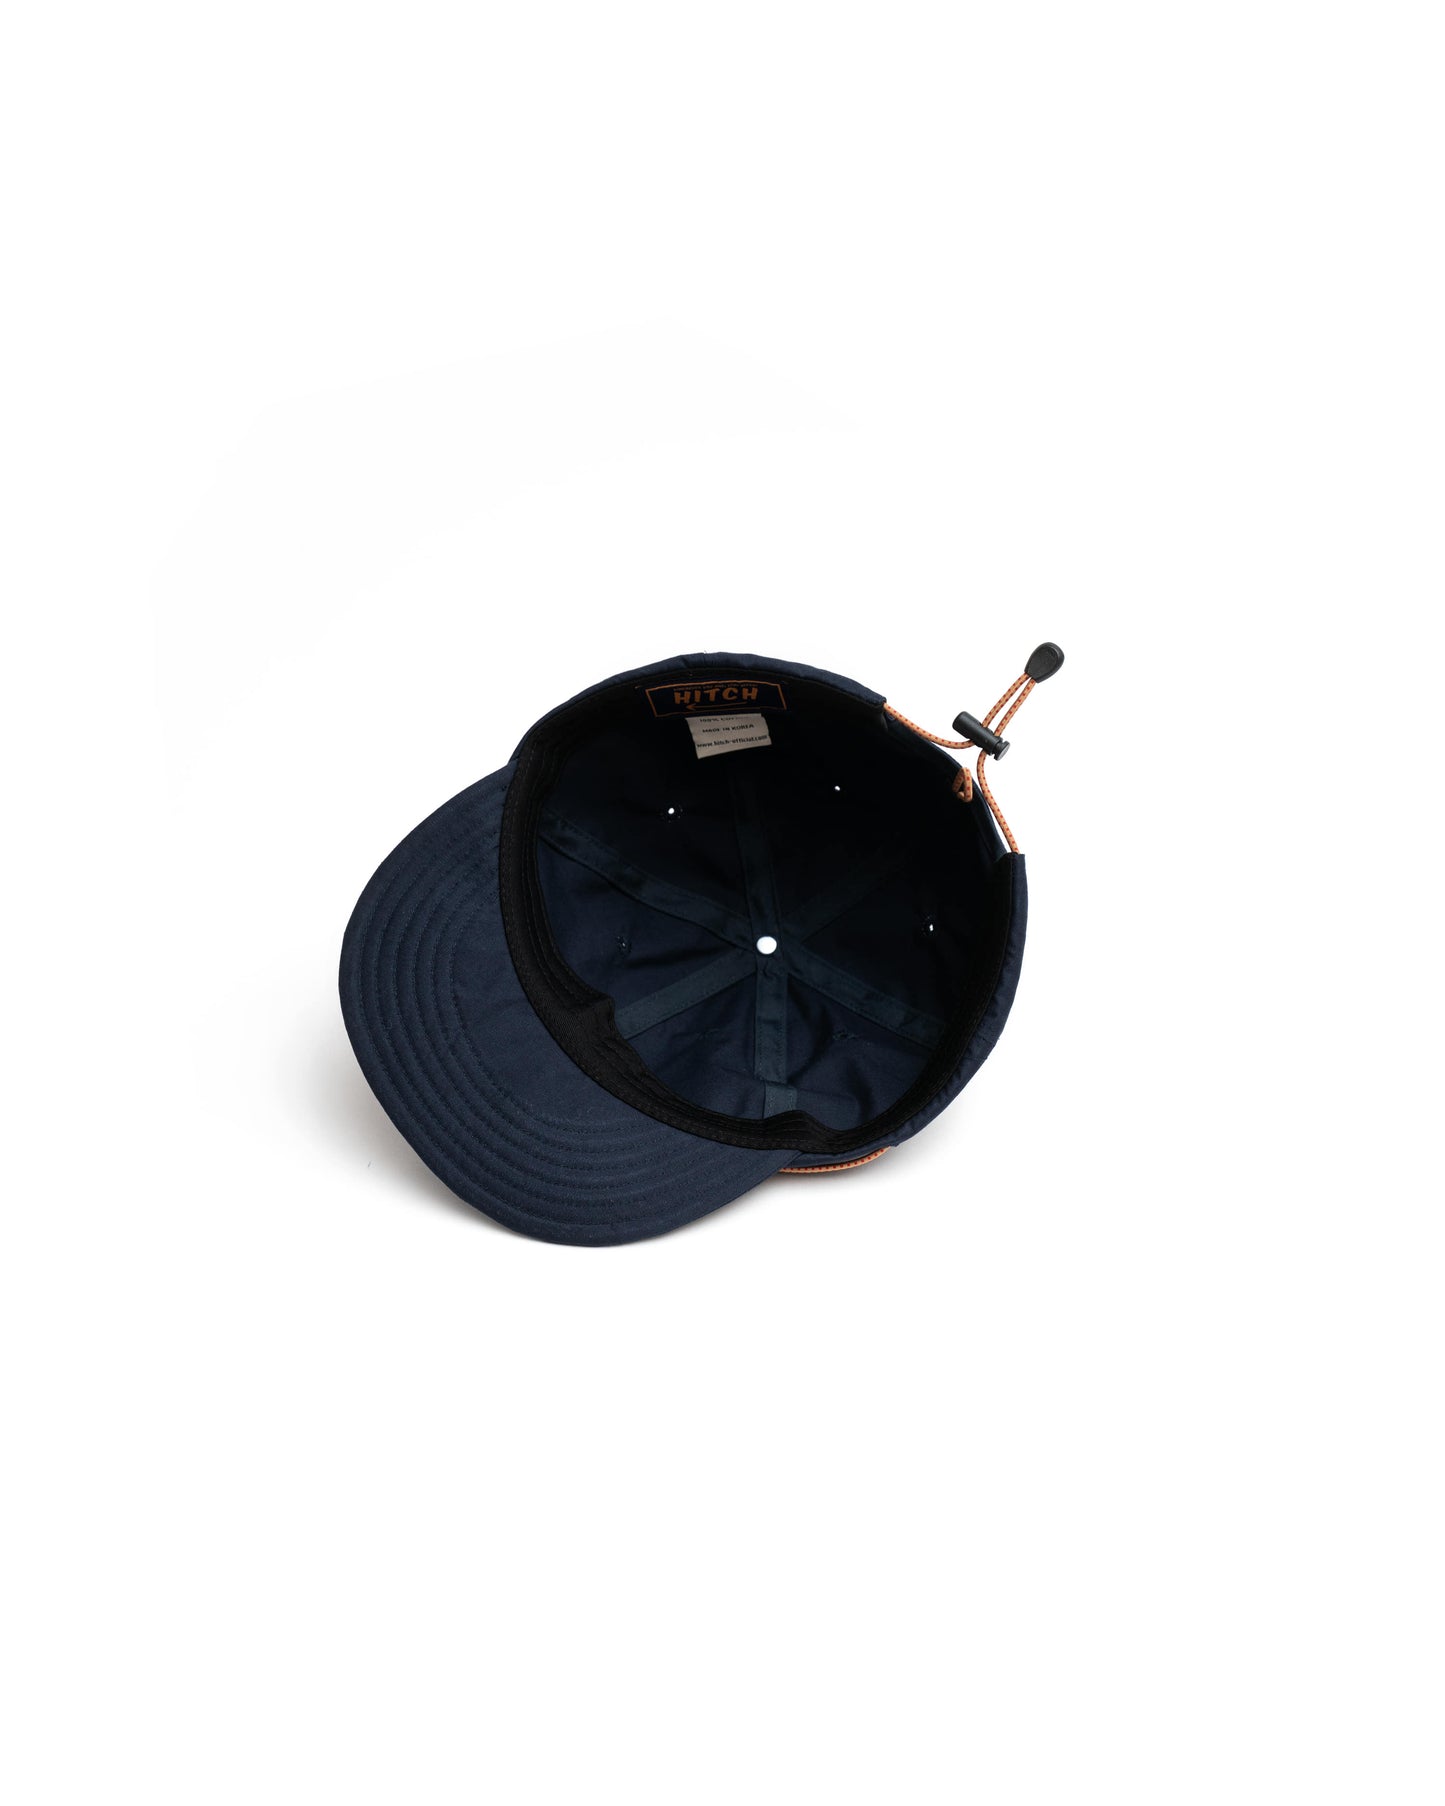 Hitch Town 1 [Navy] 帽